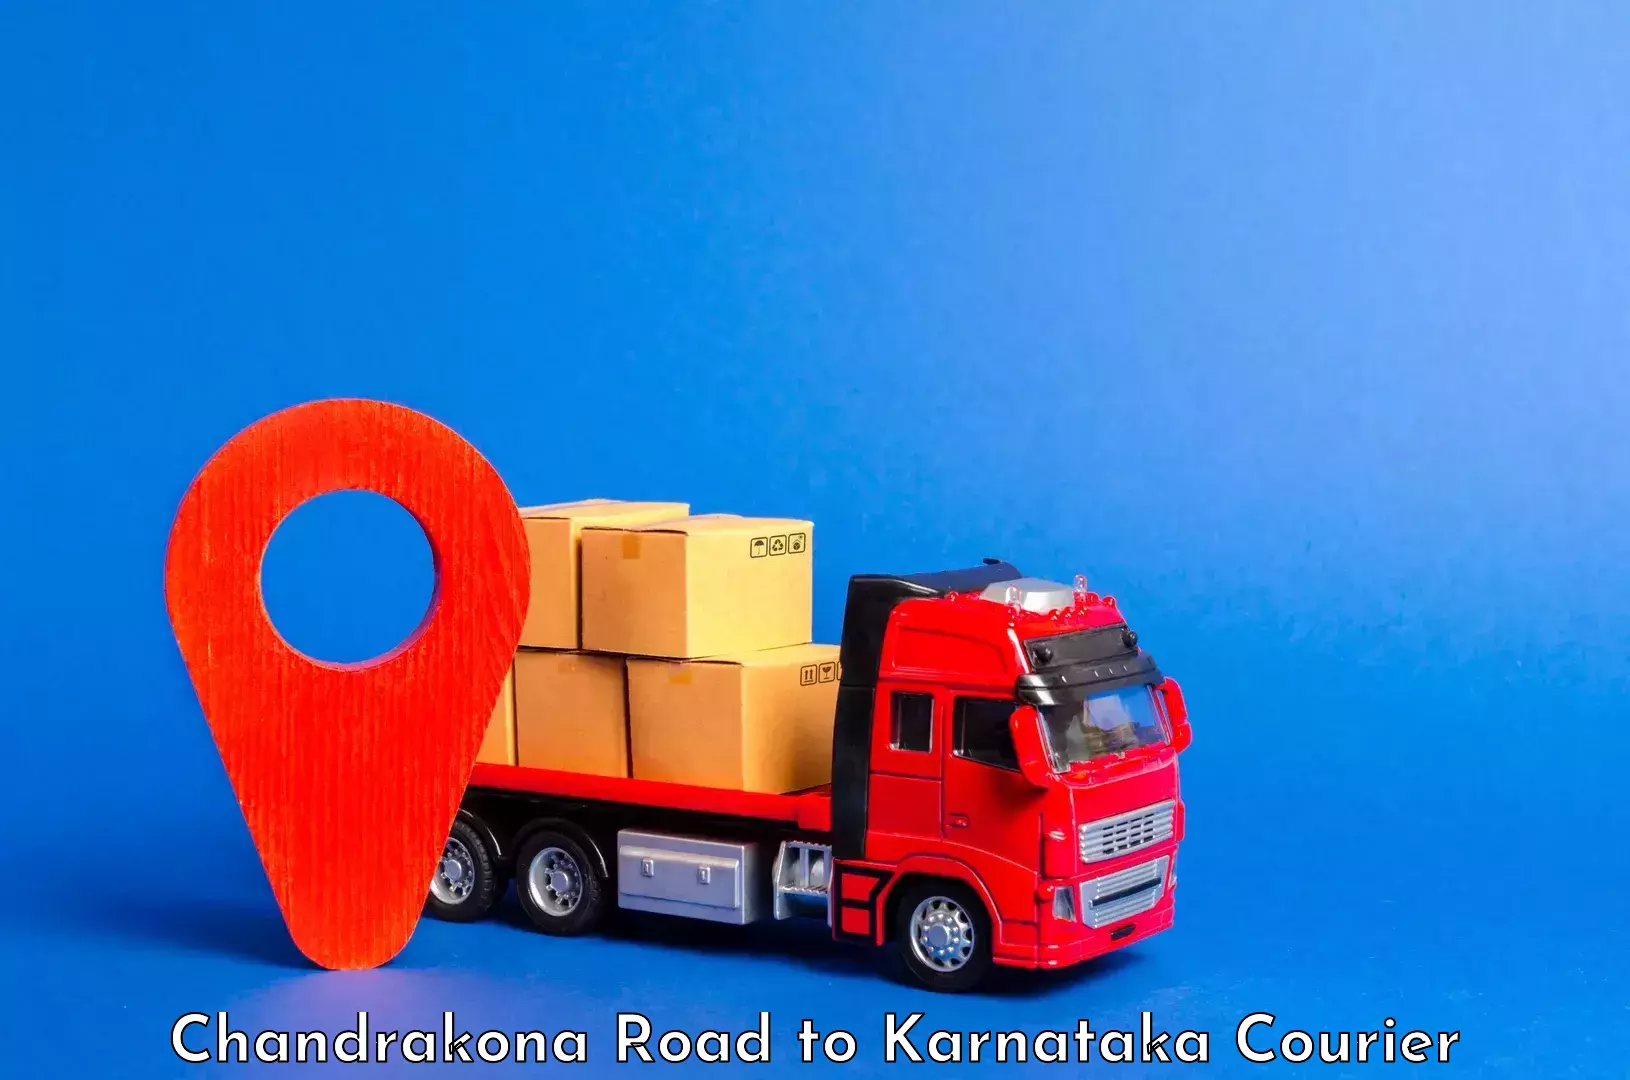 Luggage delivery logistics Chandrakona Road to Bangalore